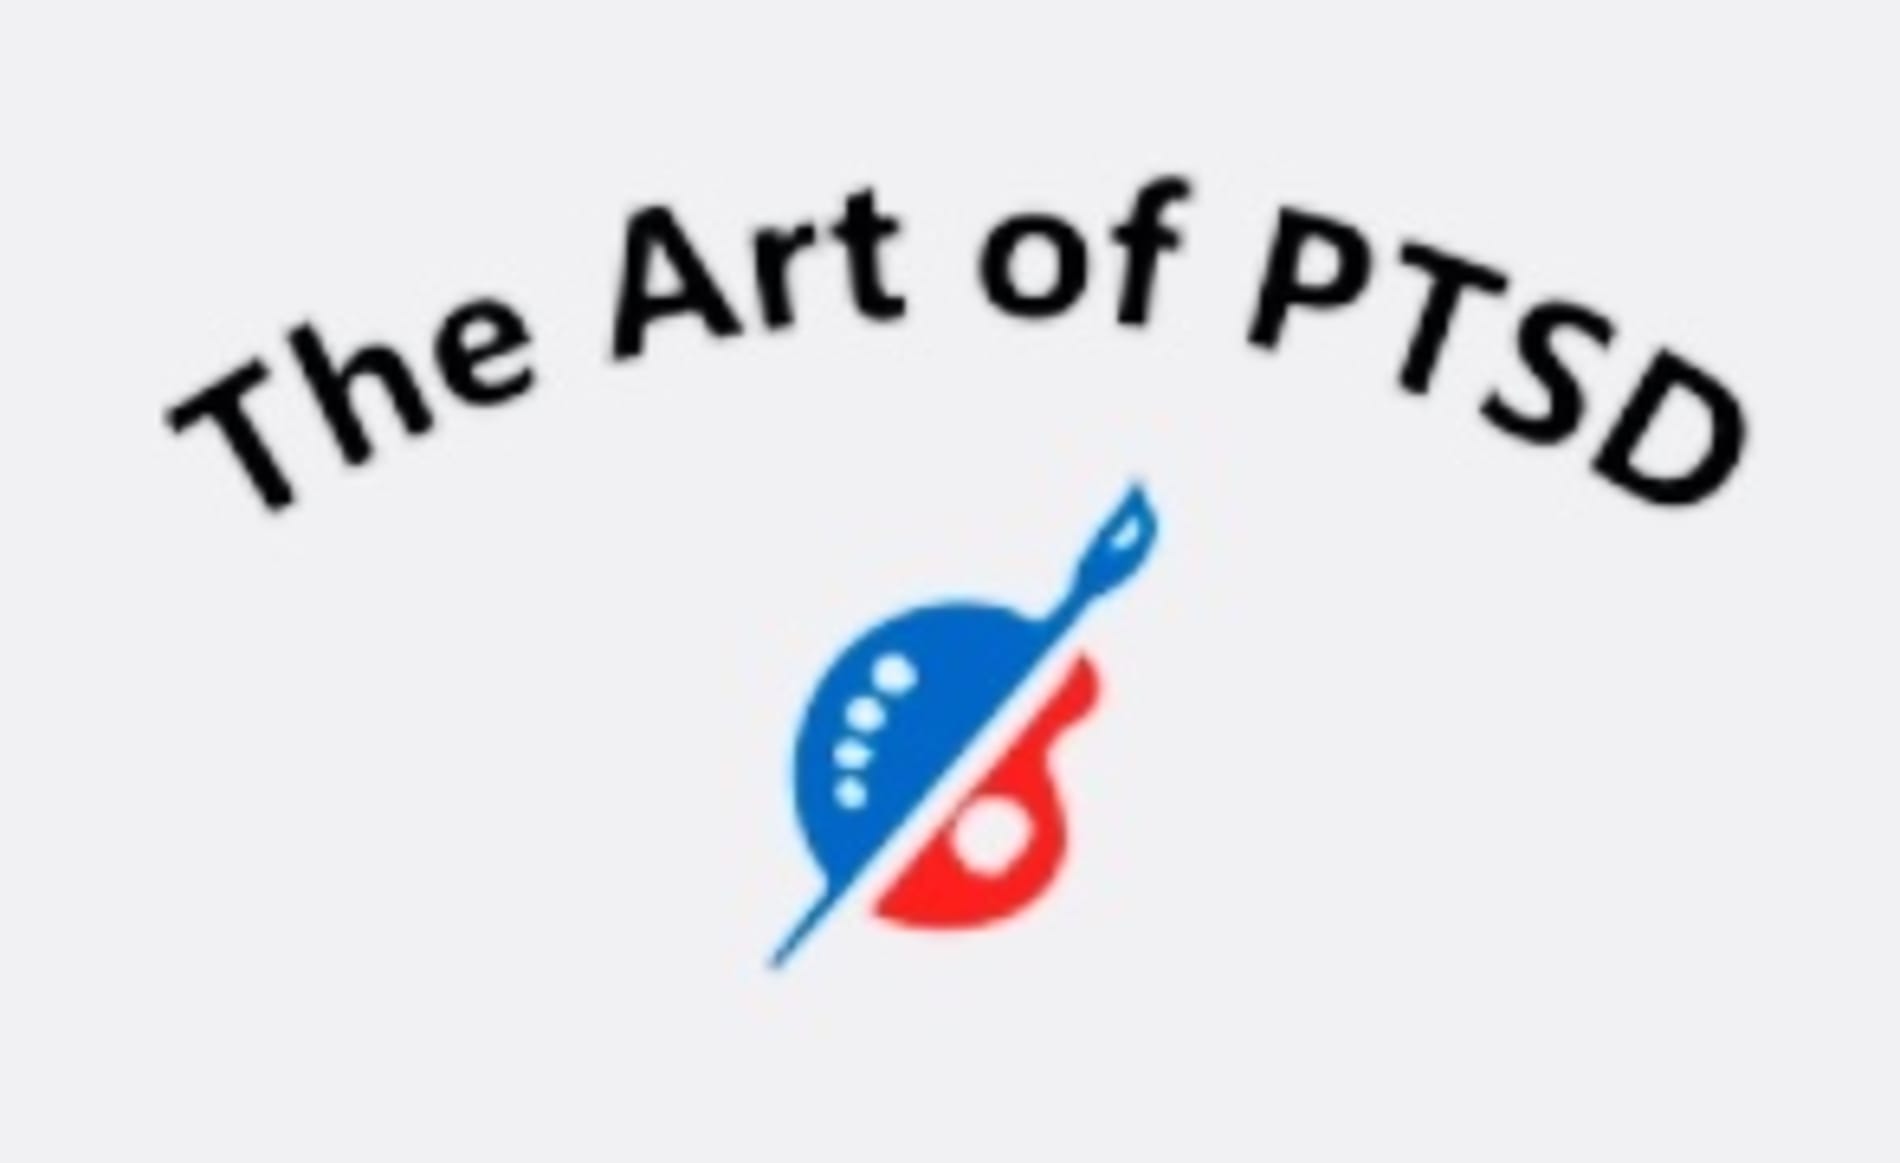 The Art of PTSD